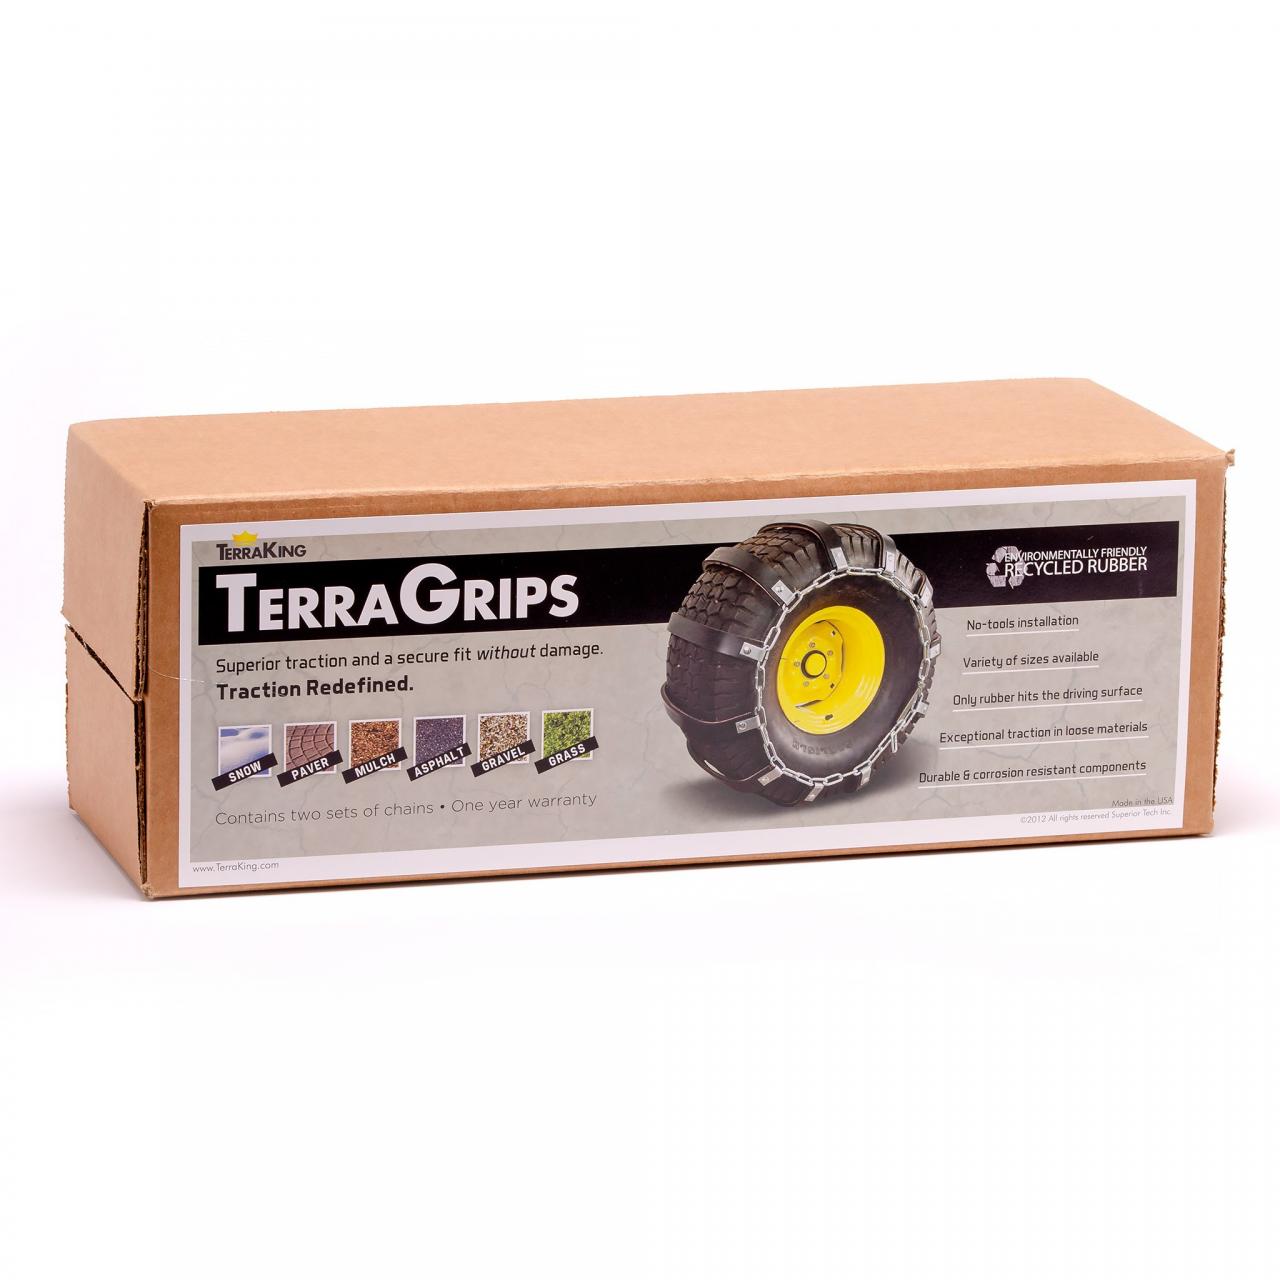 TerraGrips Tire Chains 23x10.5-12 : Amazon.ca: Automotive